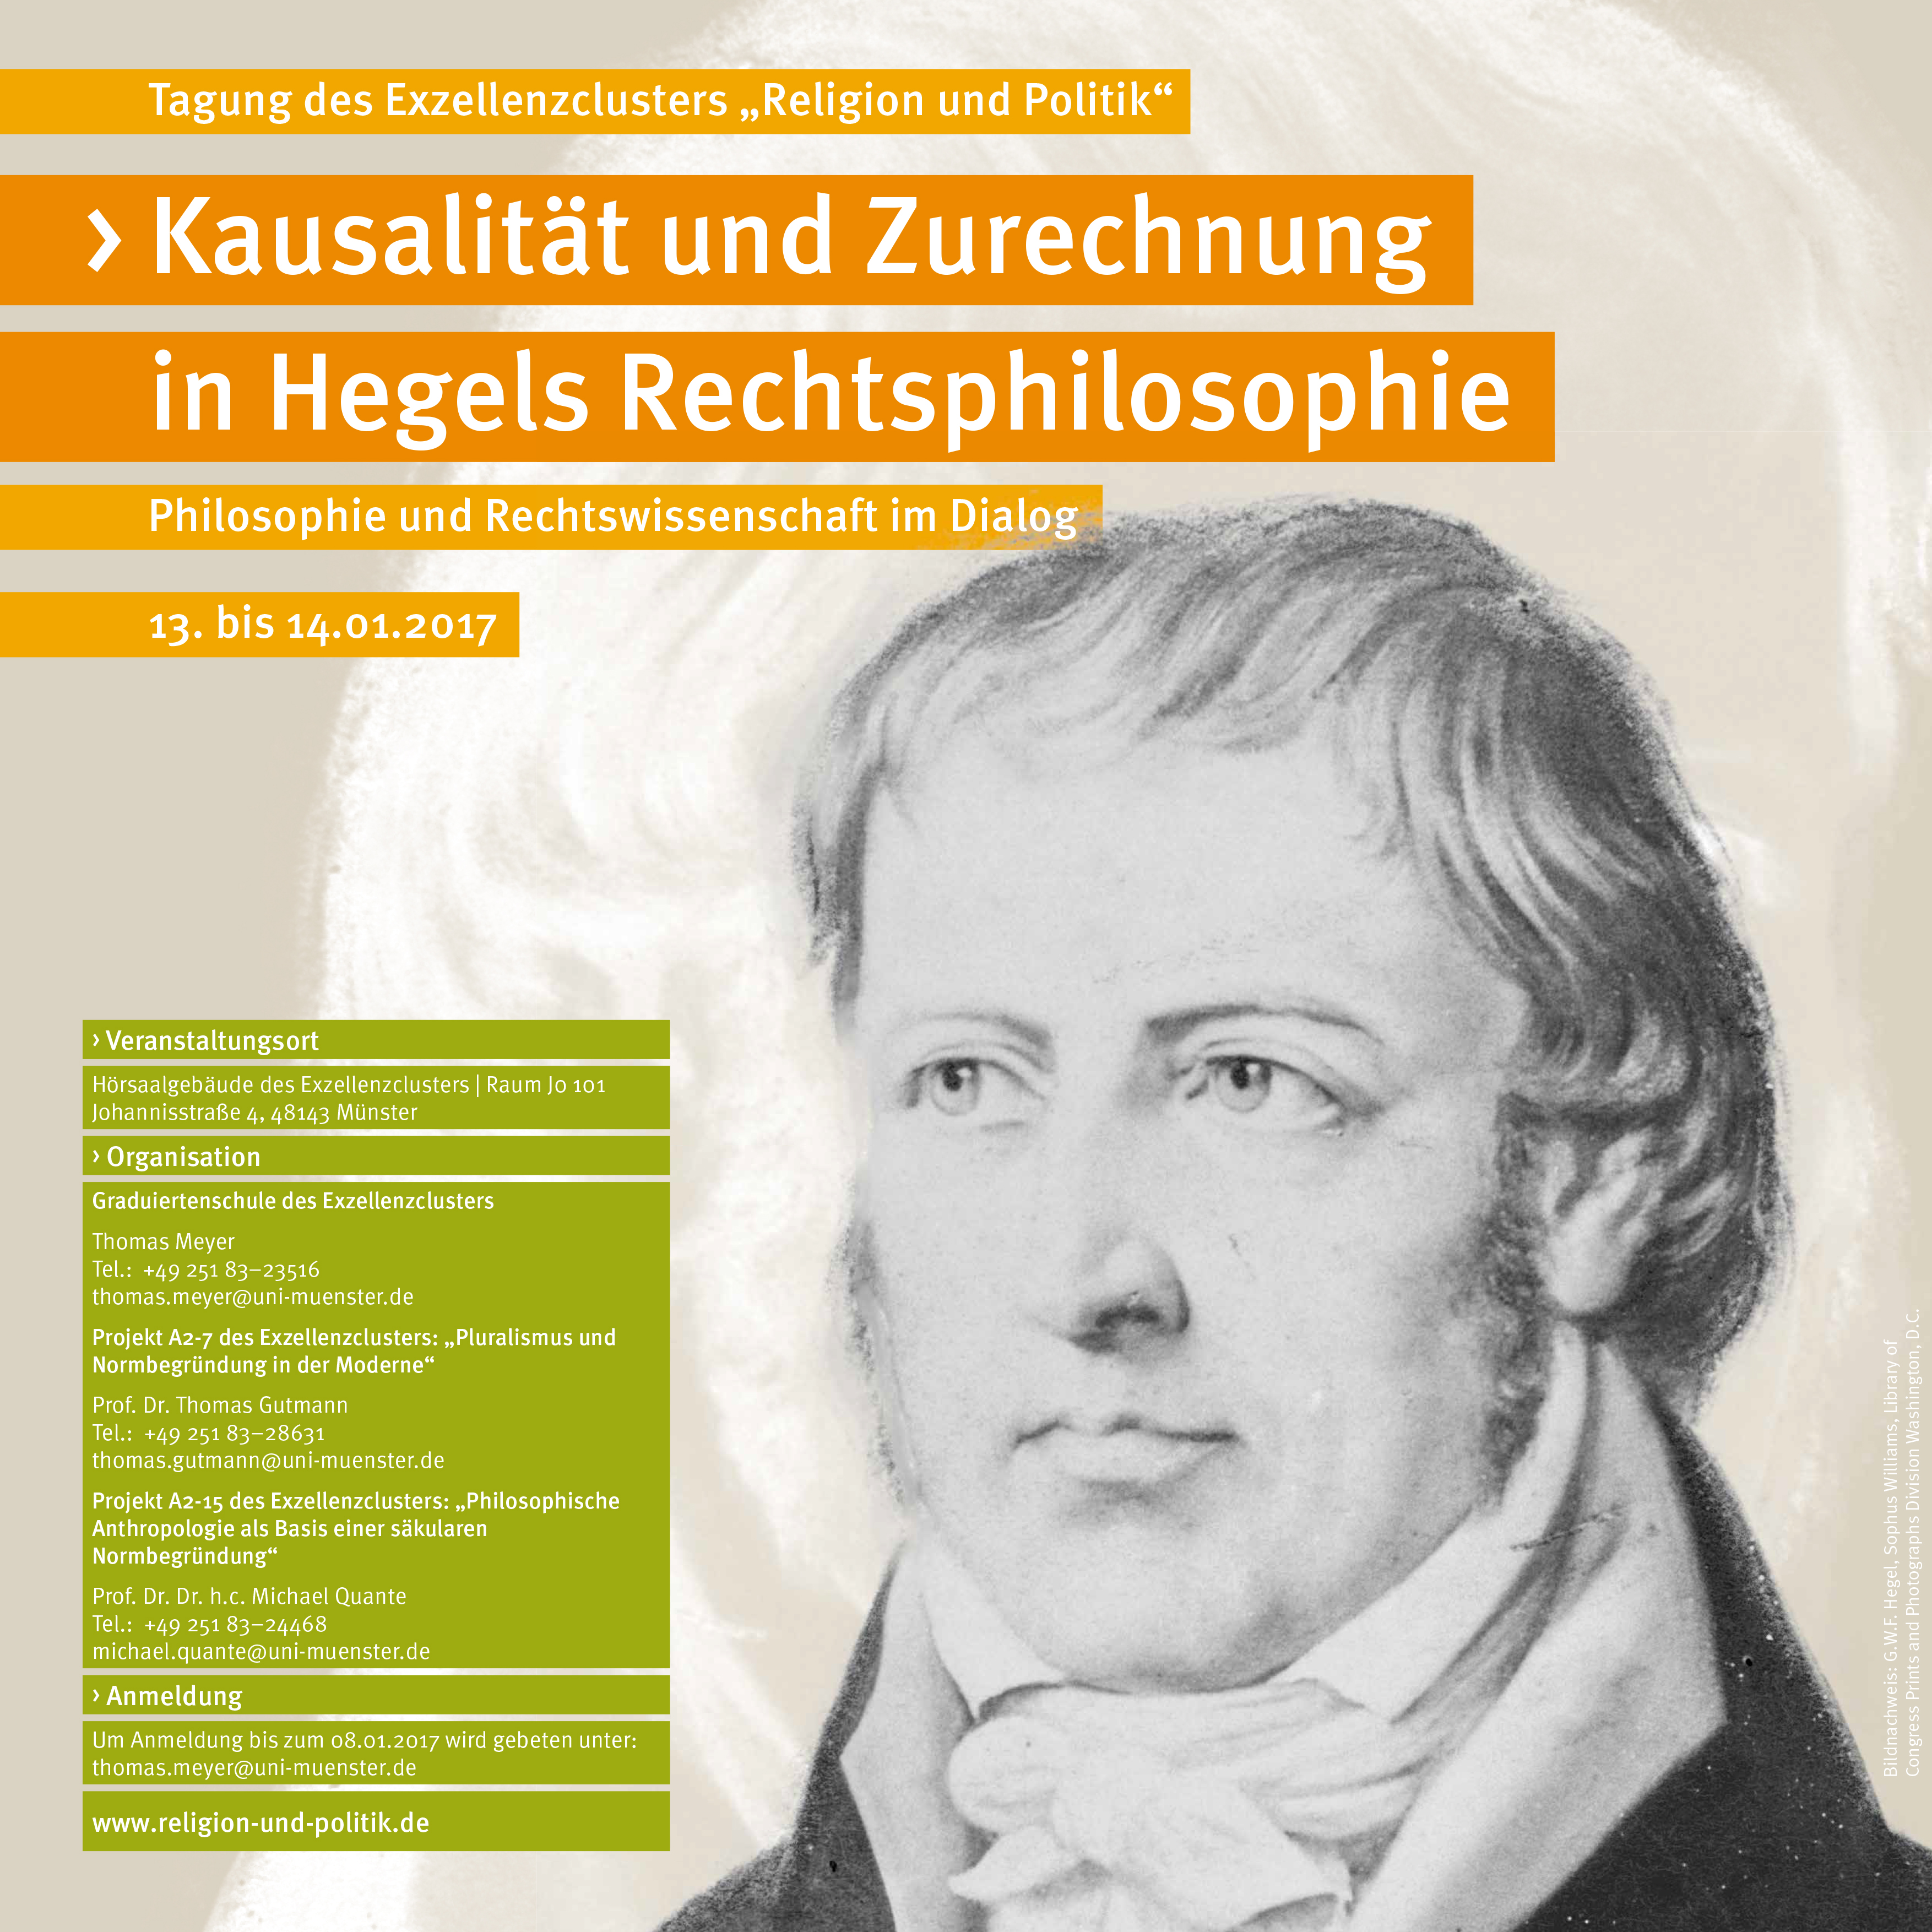 News Tagung Thomas Meyer Hegel 1 1